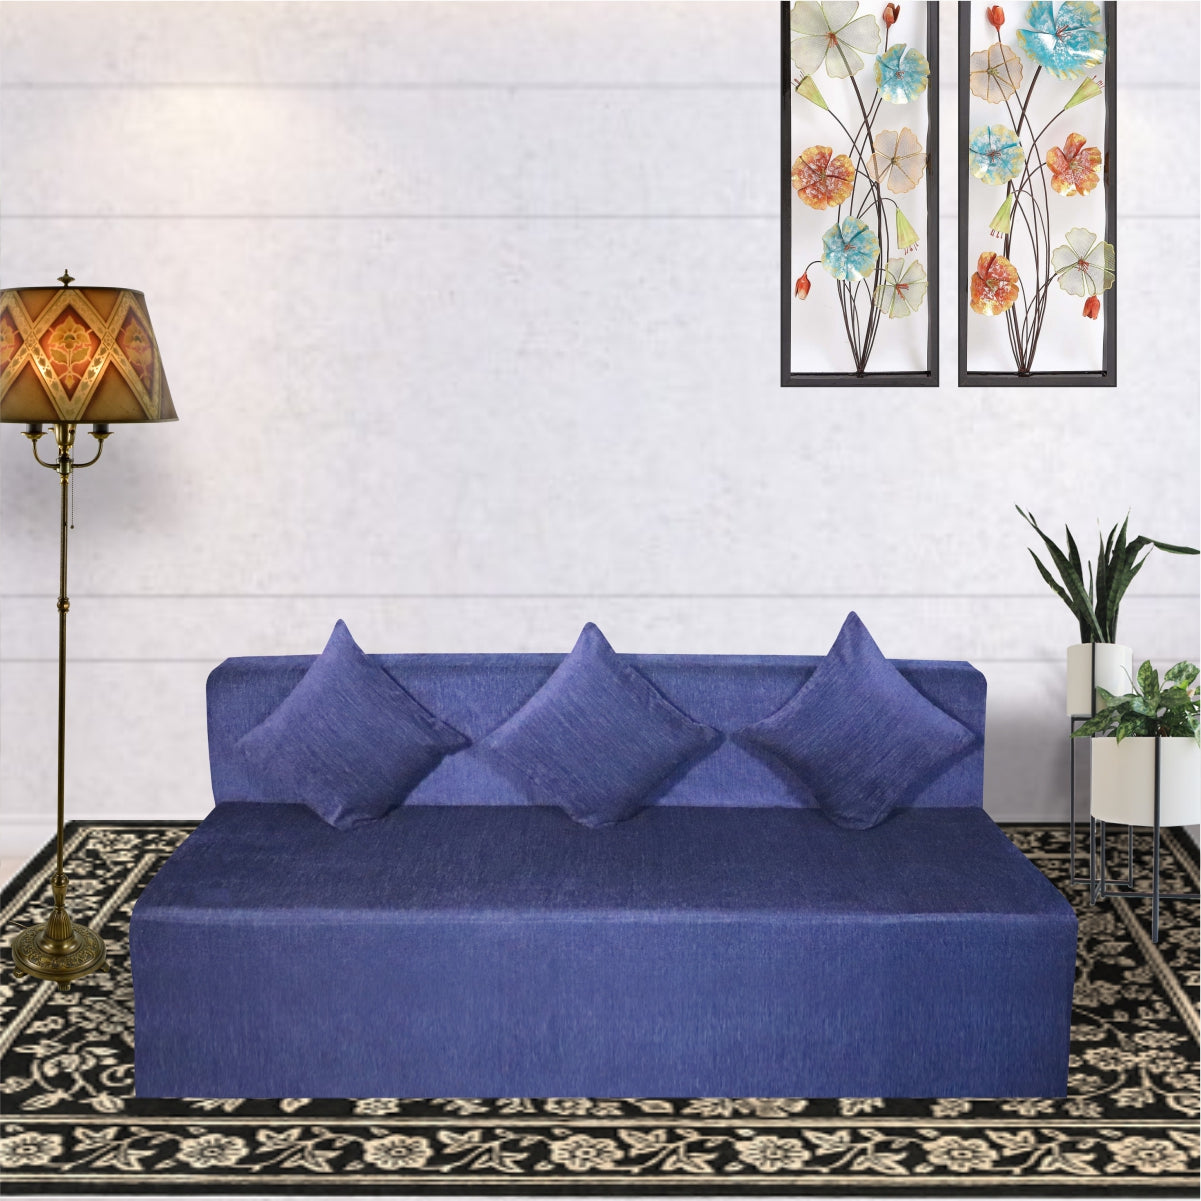 Blue Chenille Molfino Fabric 6×6 Sofa cum Bed with 3 Cushion